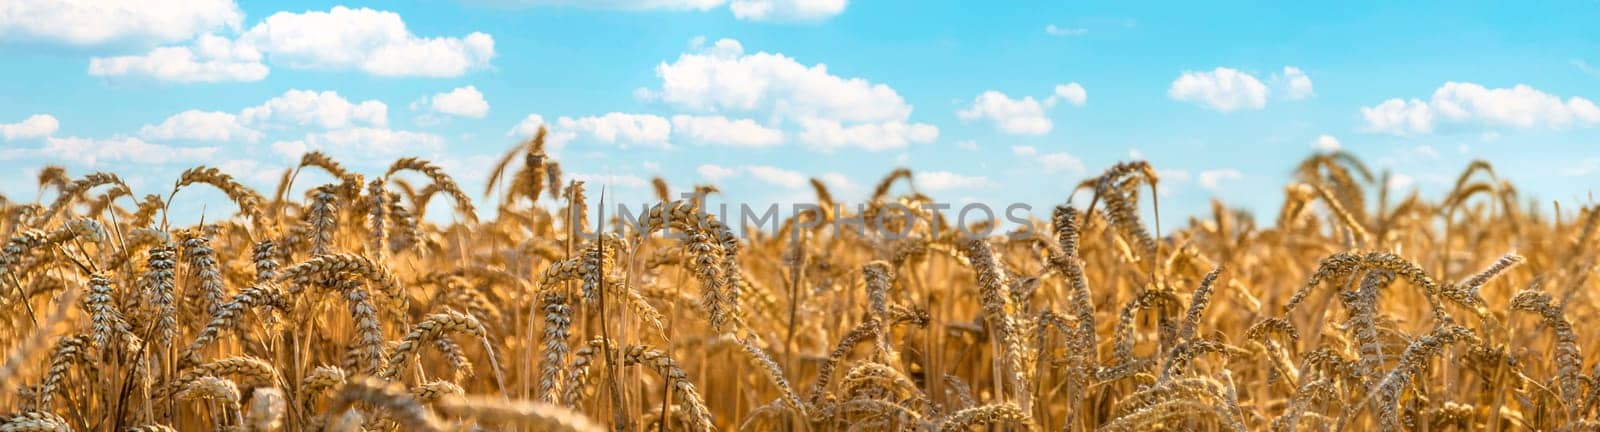 Wheat growing spikelets field harvest. Selective focus. by yanadjana